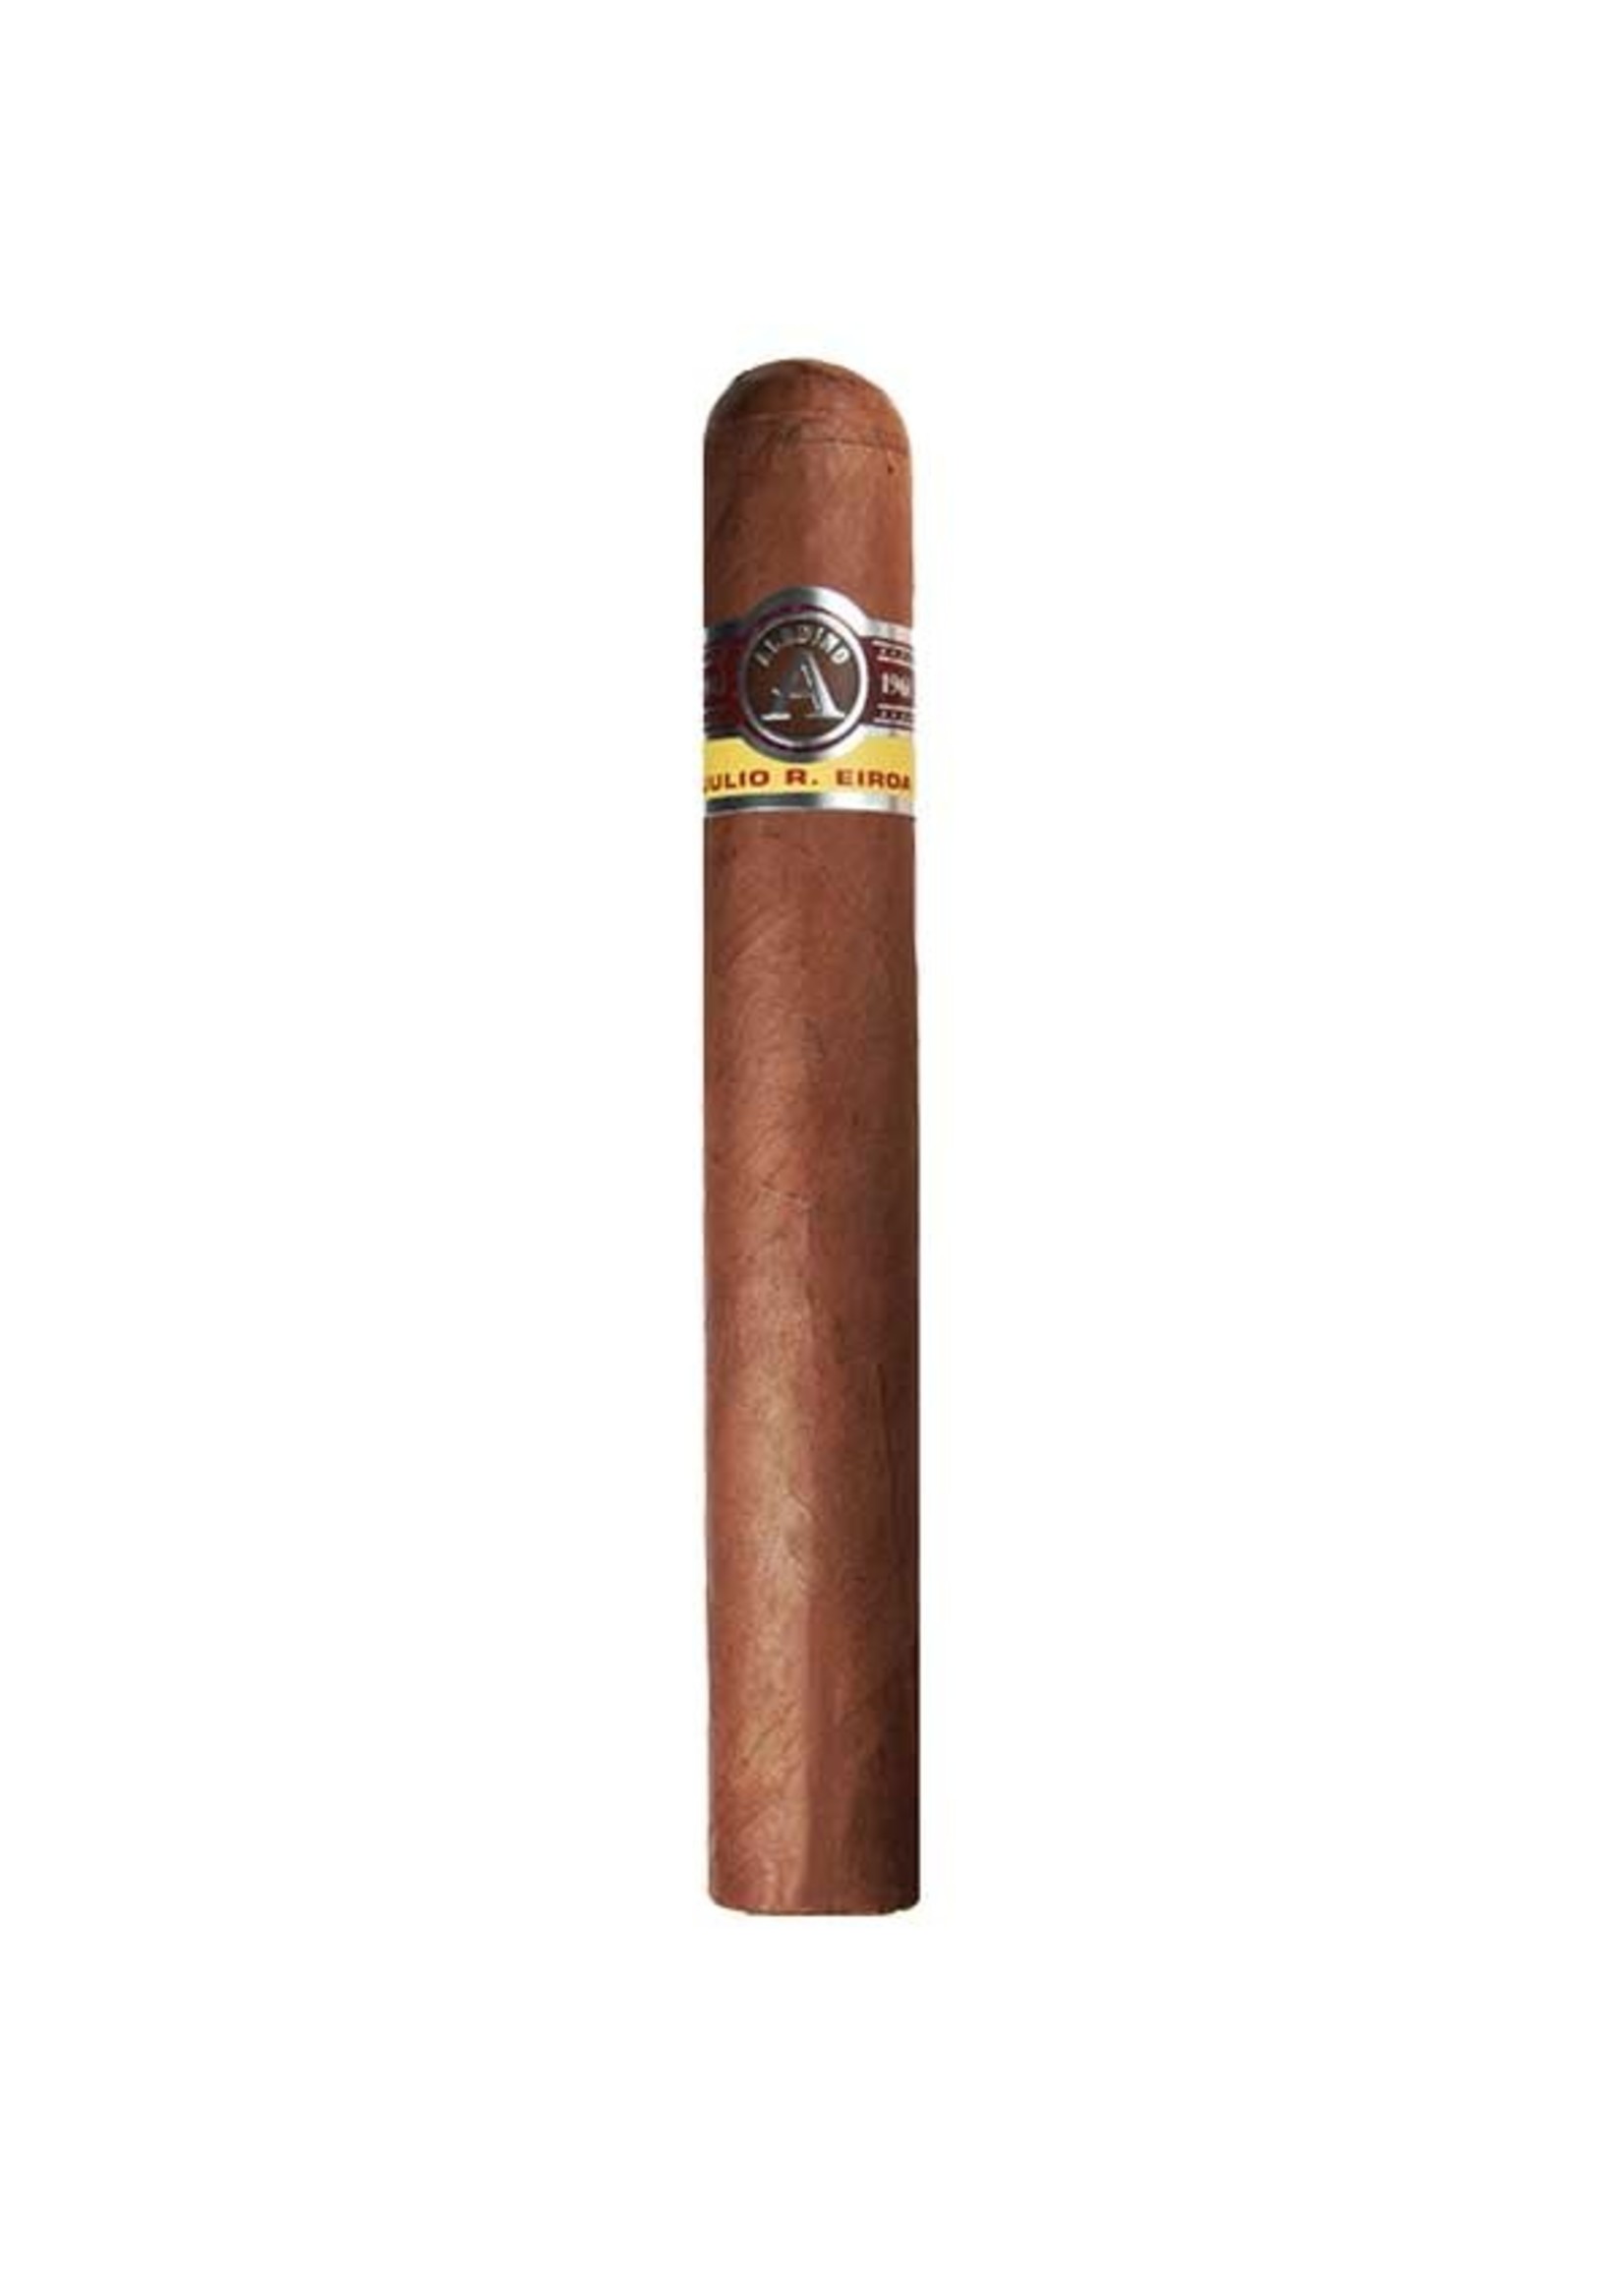 JRE Tobacco Co. Aladino - Gordo - 60x6.5 - Single (C3)